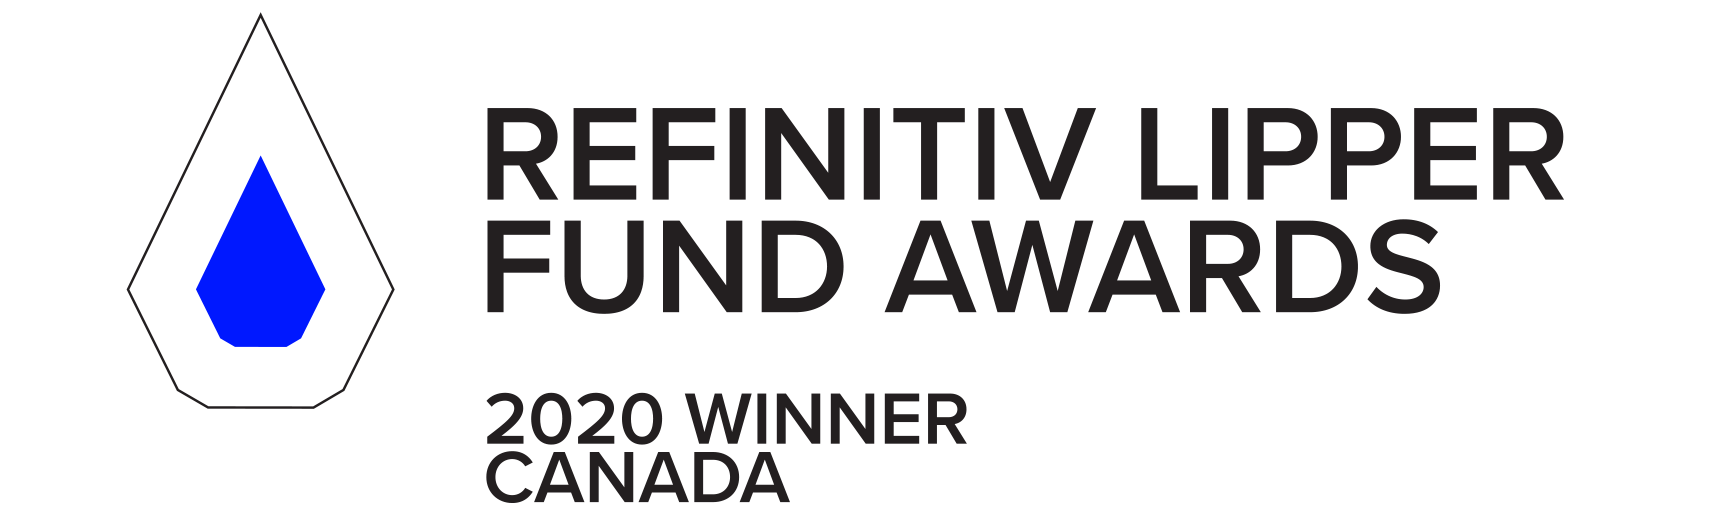 Refinitiv Lipper Fund Awards 2020 Winner Canada